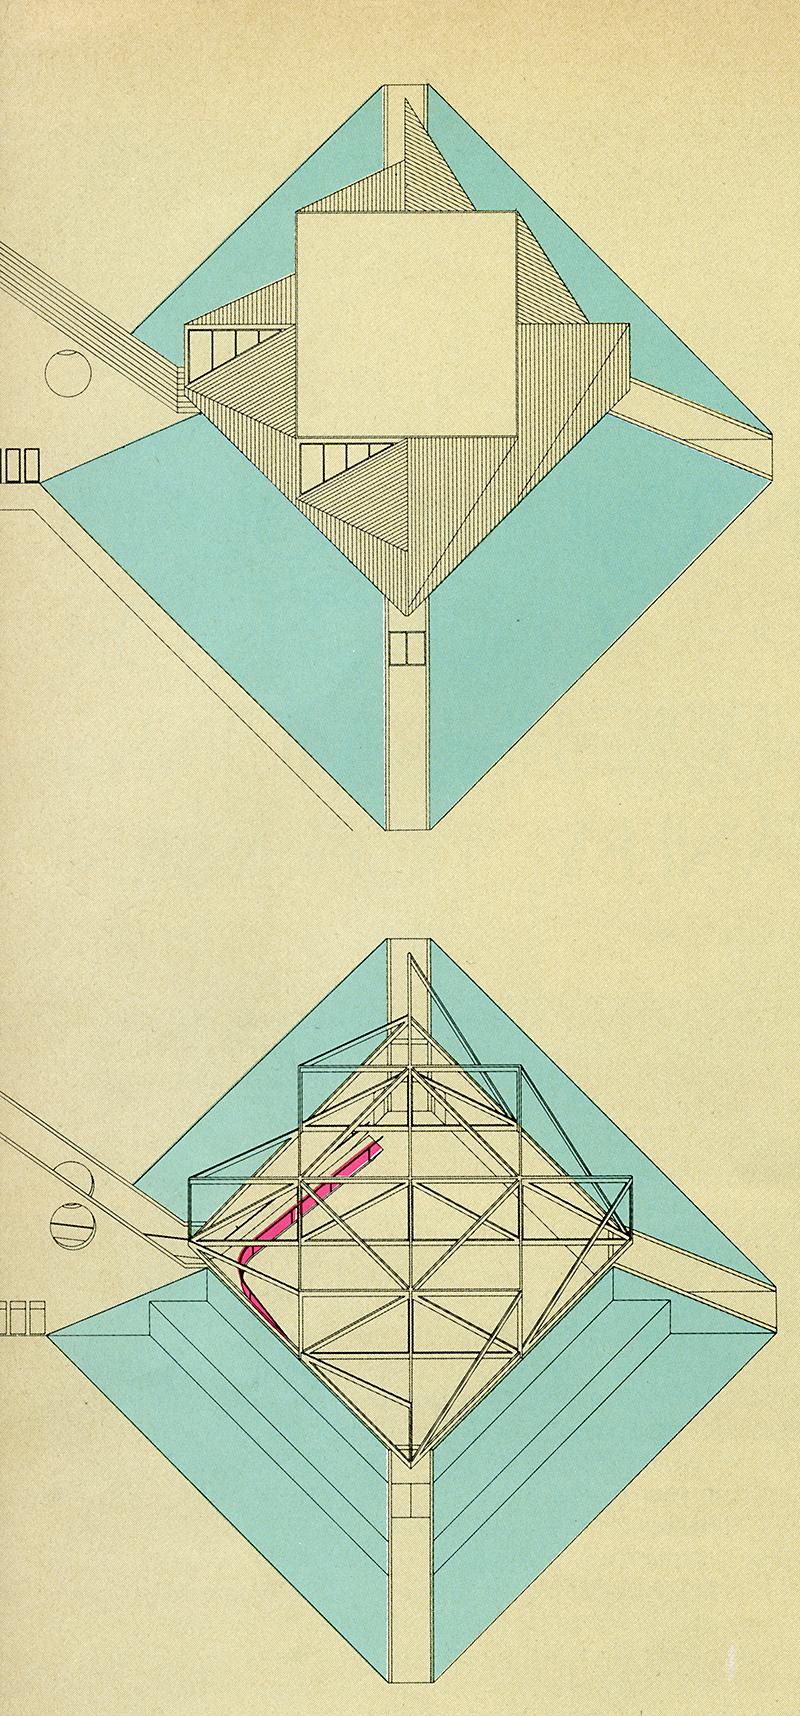 Stanley Tigerman. Architectural Record. Jan 1973, 106